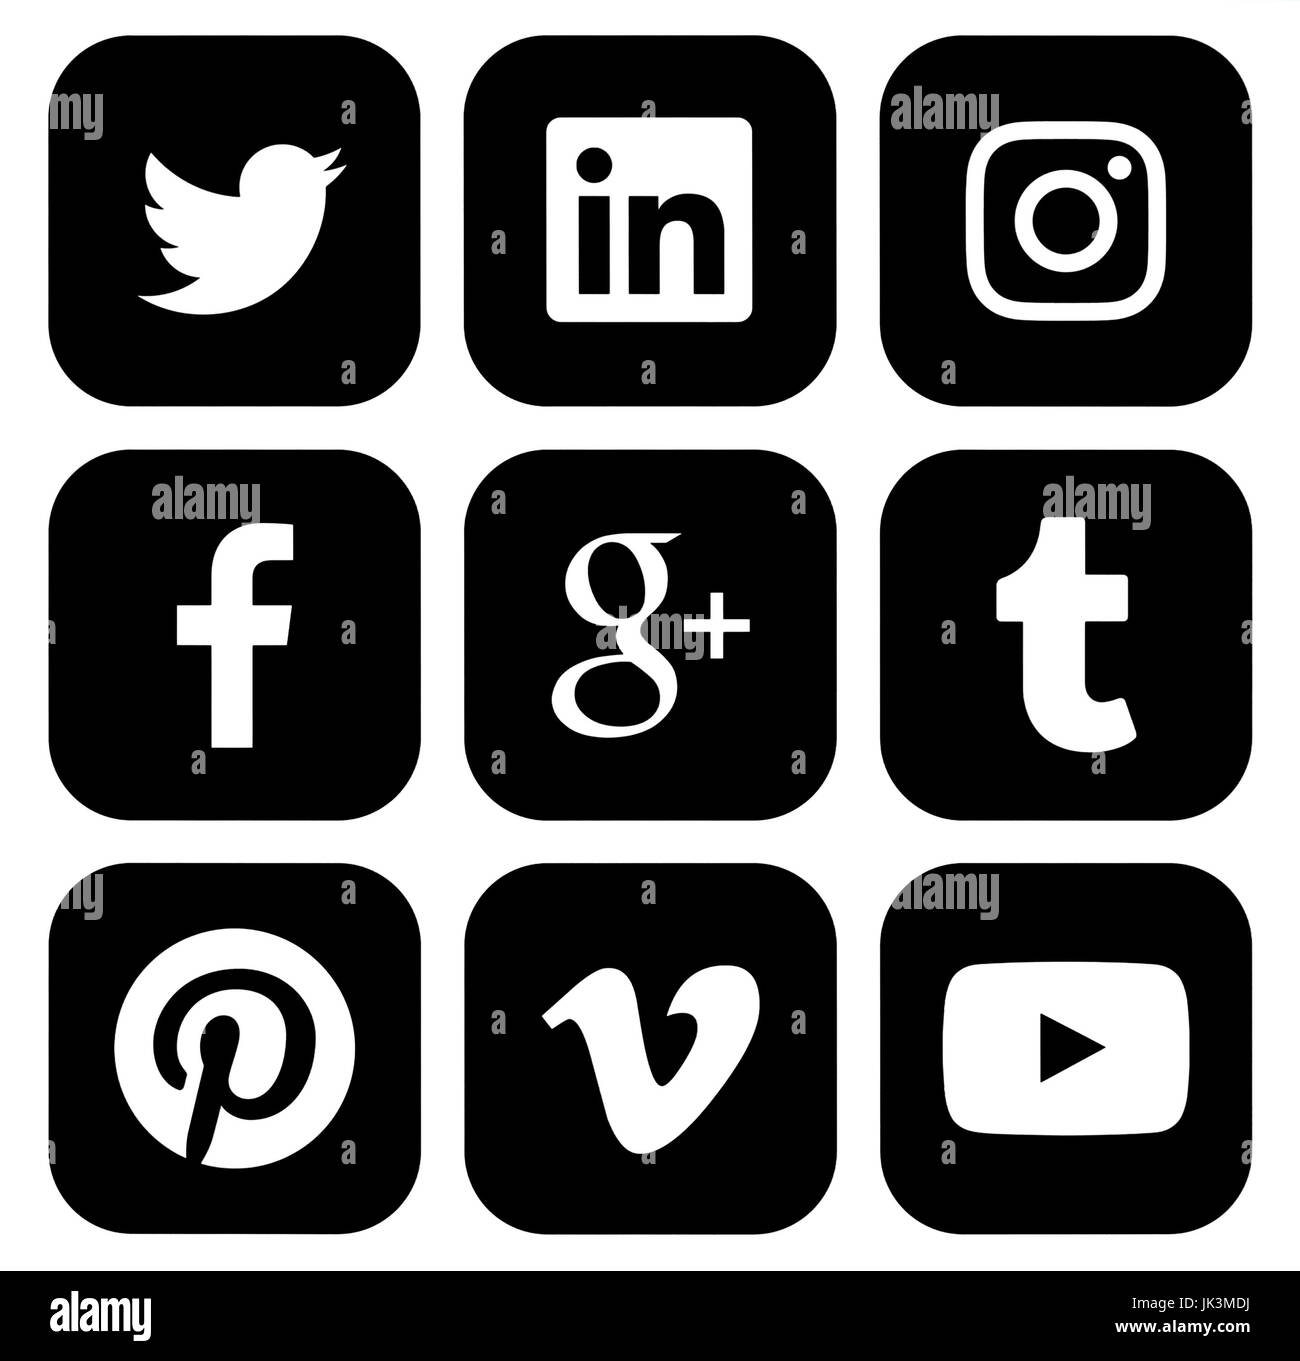 Kiev, Ucraina - 14 Marzo 2017: Raccolta del popolare social media logo nero stampato su carta: Facebook, Twitter, Google Plus, Instagram, Pinterest, Foto Stock